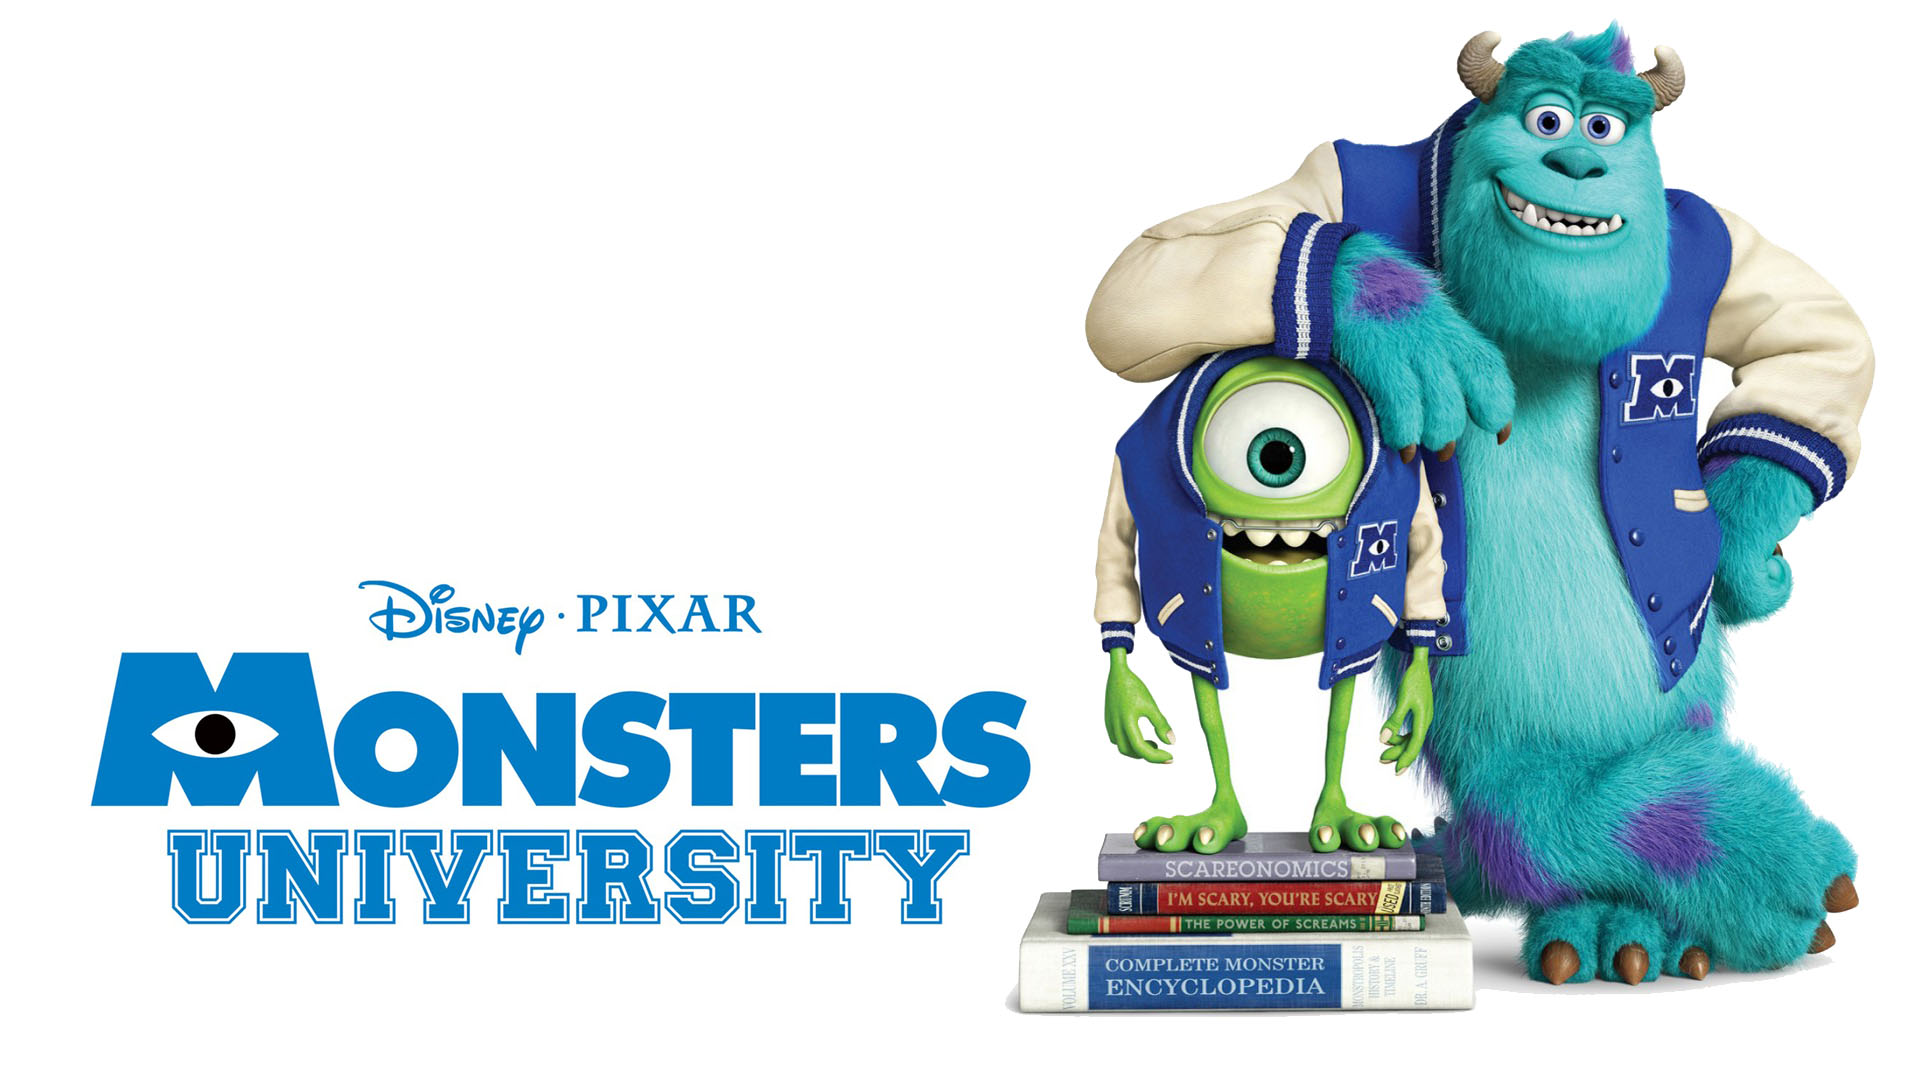 Monsters University **** (2013, Billy Crystal, John Goodman, Steve